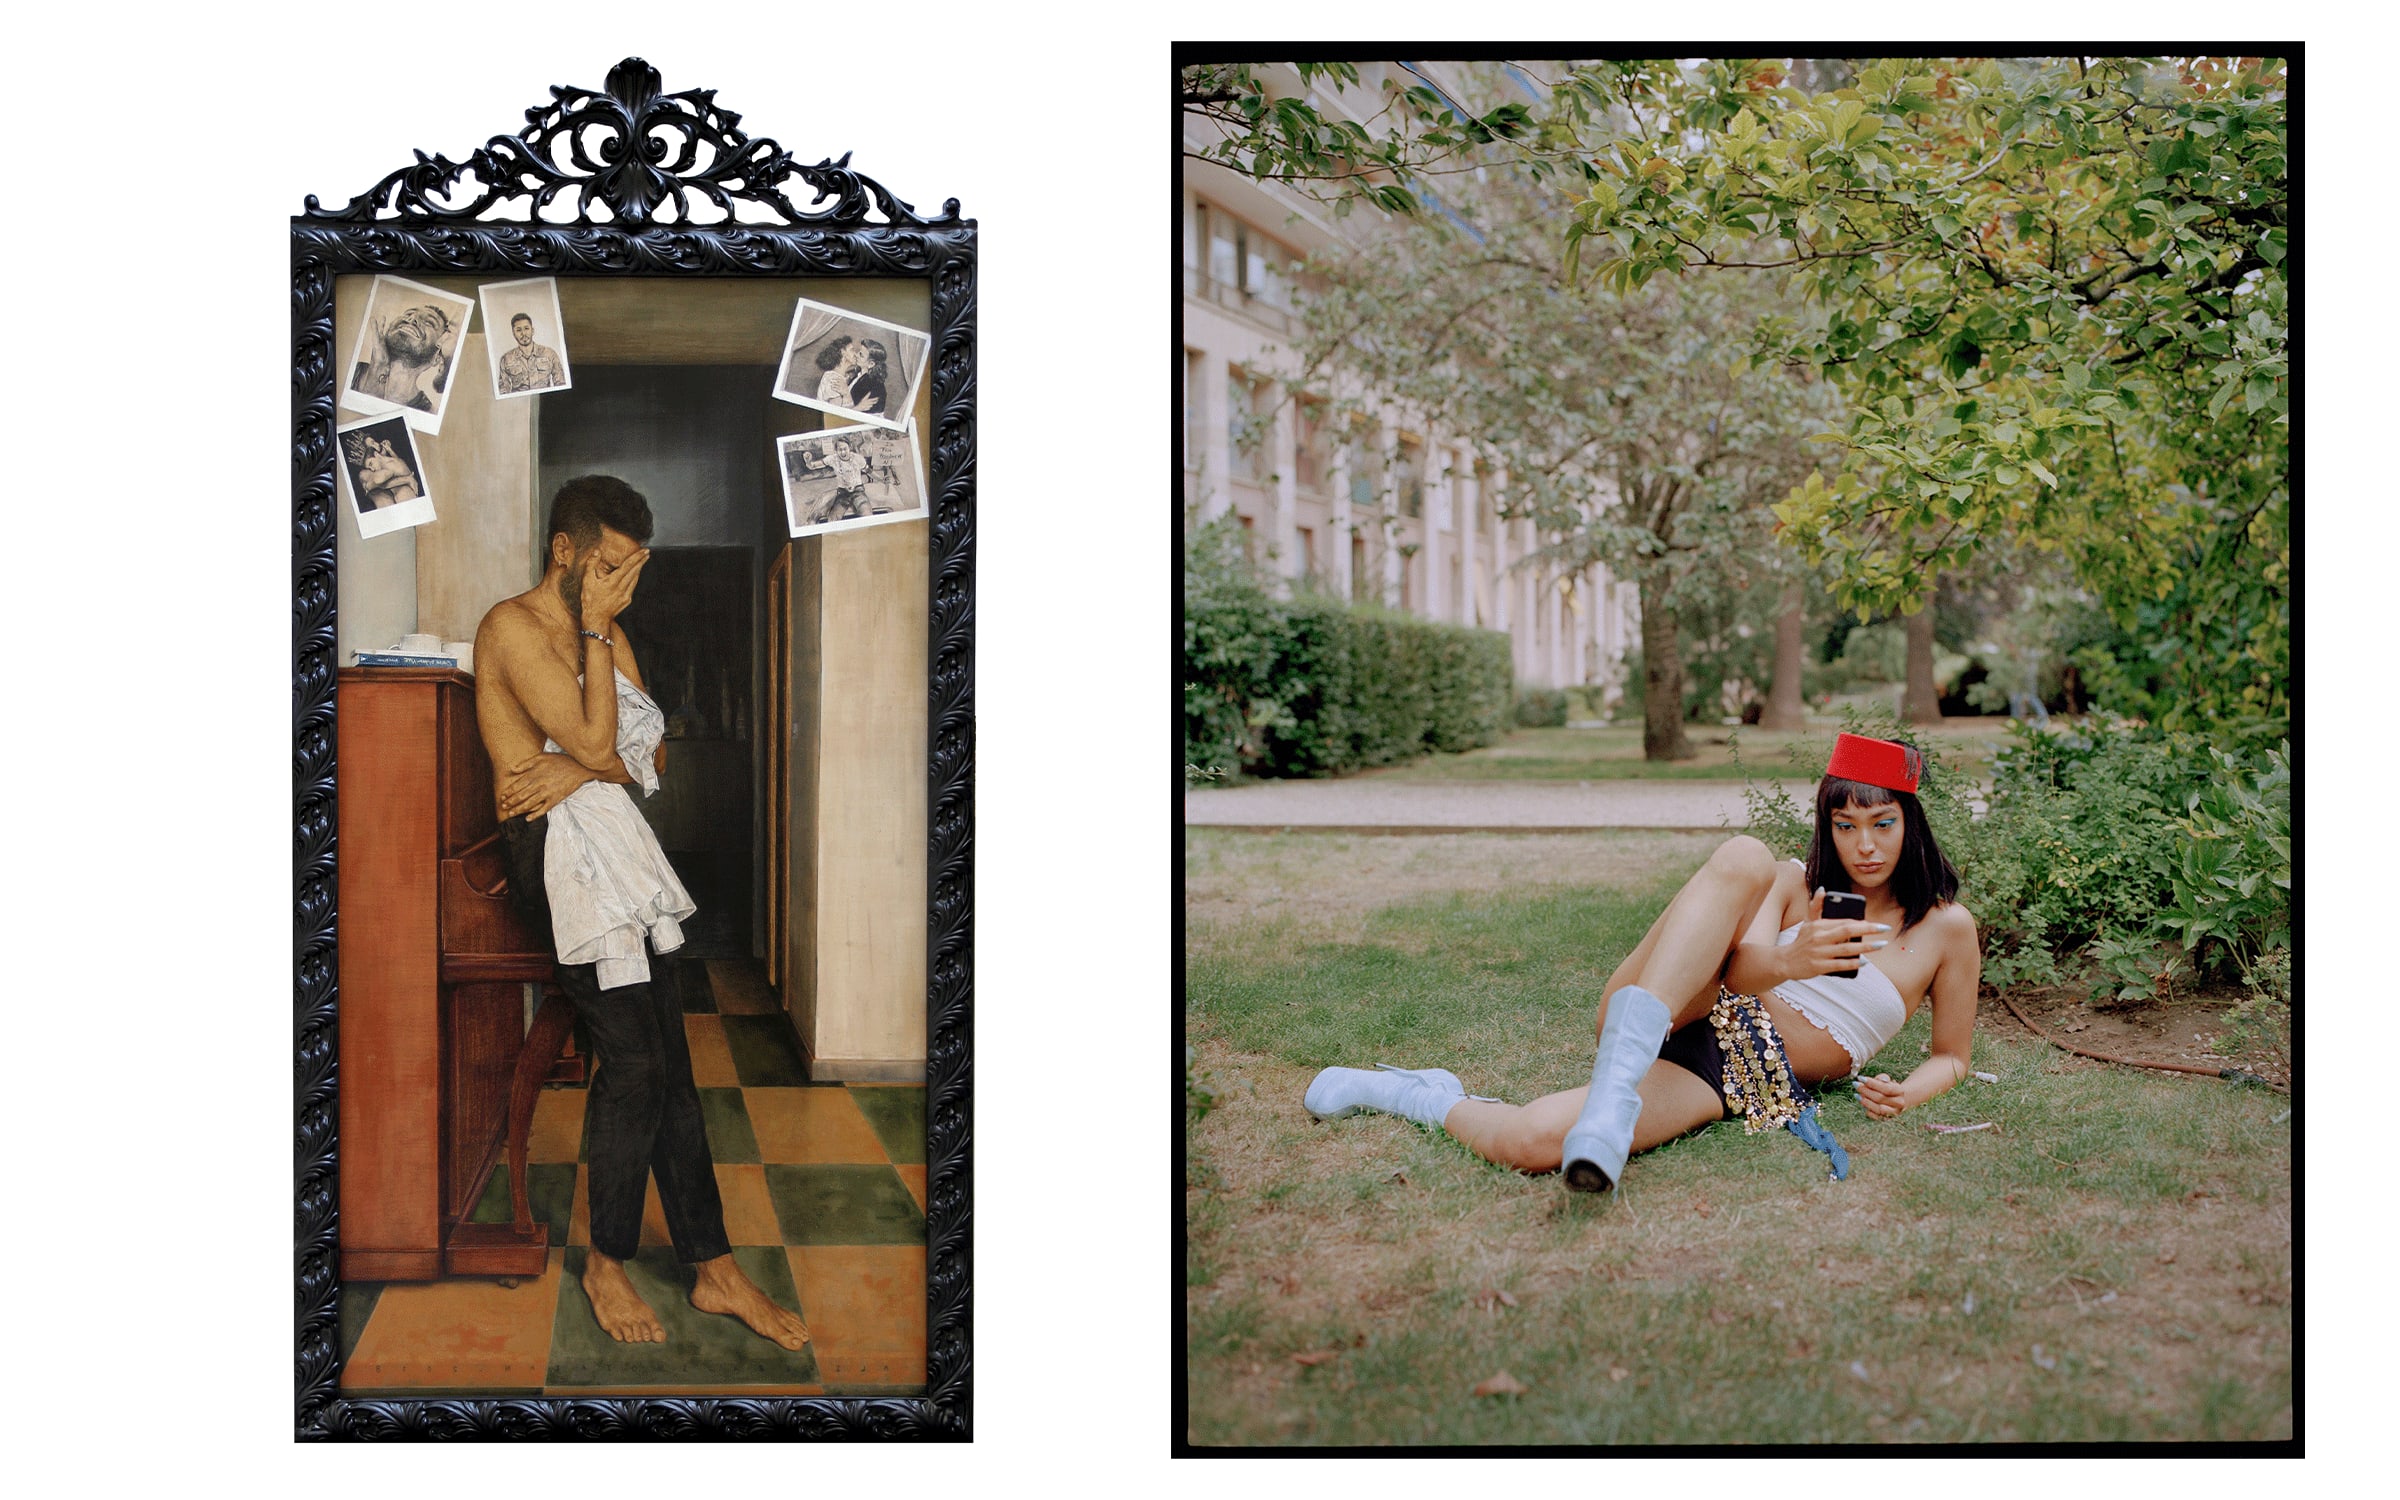 Left: Alireza Shojaian, The Mirror. Collection of Ramzi Abufaraj and Keith Nuss. Courtesy of the artist. Right: Camille Lenain, Lalla Rami, Boulogne, 2020. Courtesy of the artist.